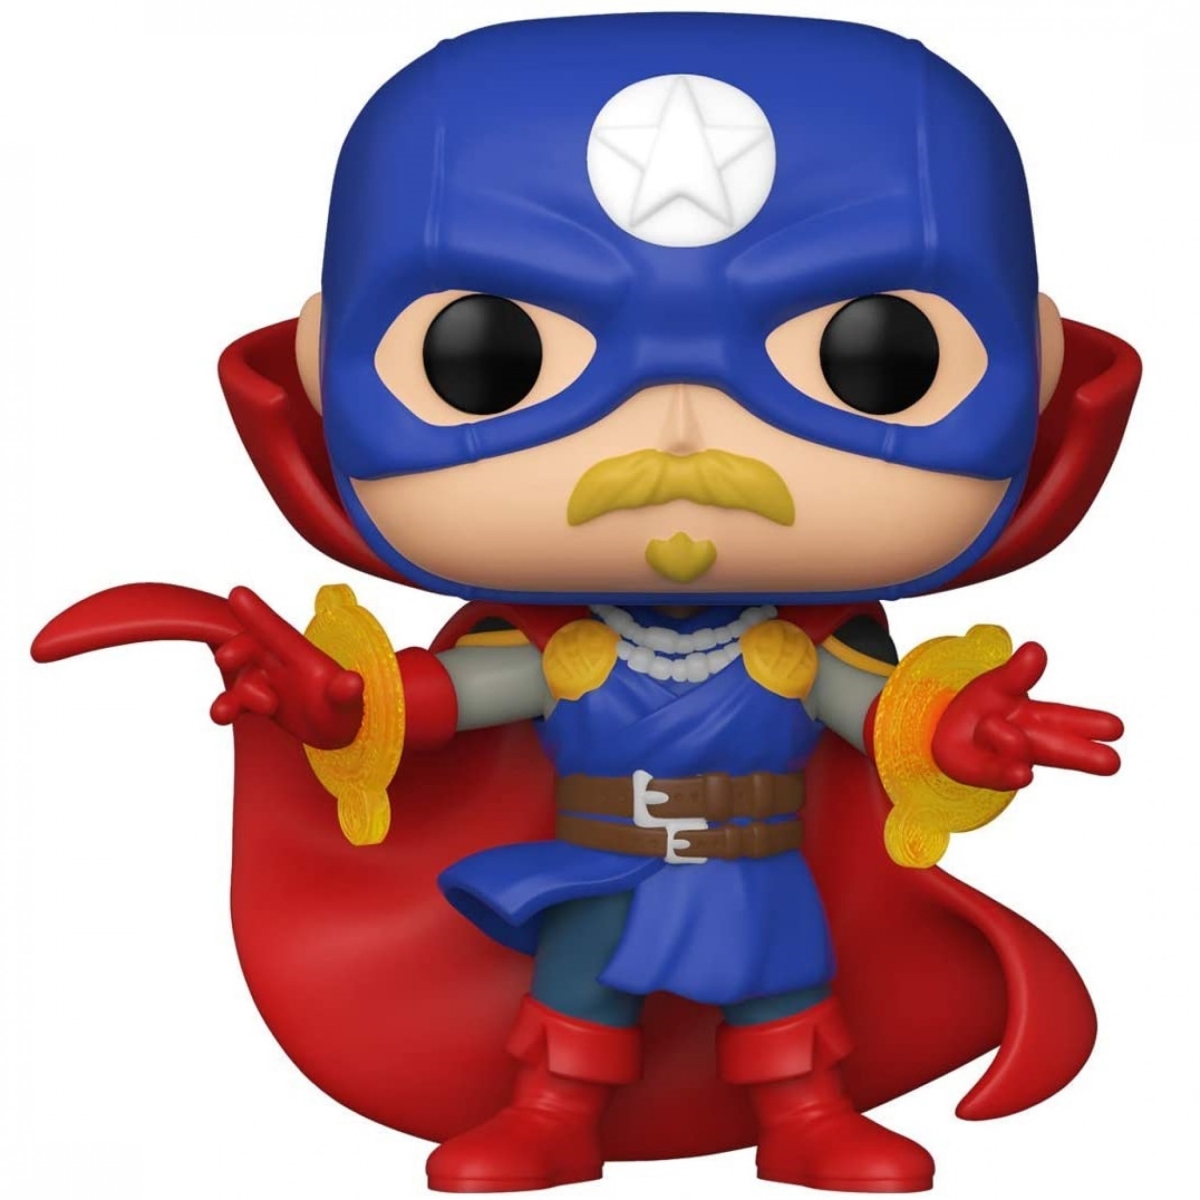 Picture of Captain America 822077 Marvel Infinity Warps Soldier Supreme Funko Pop Vinyl Figure